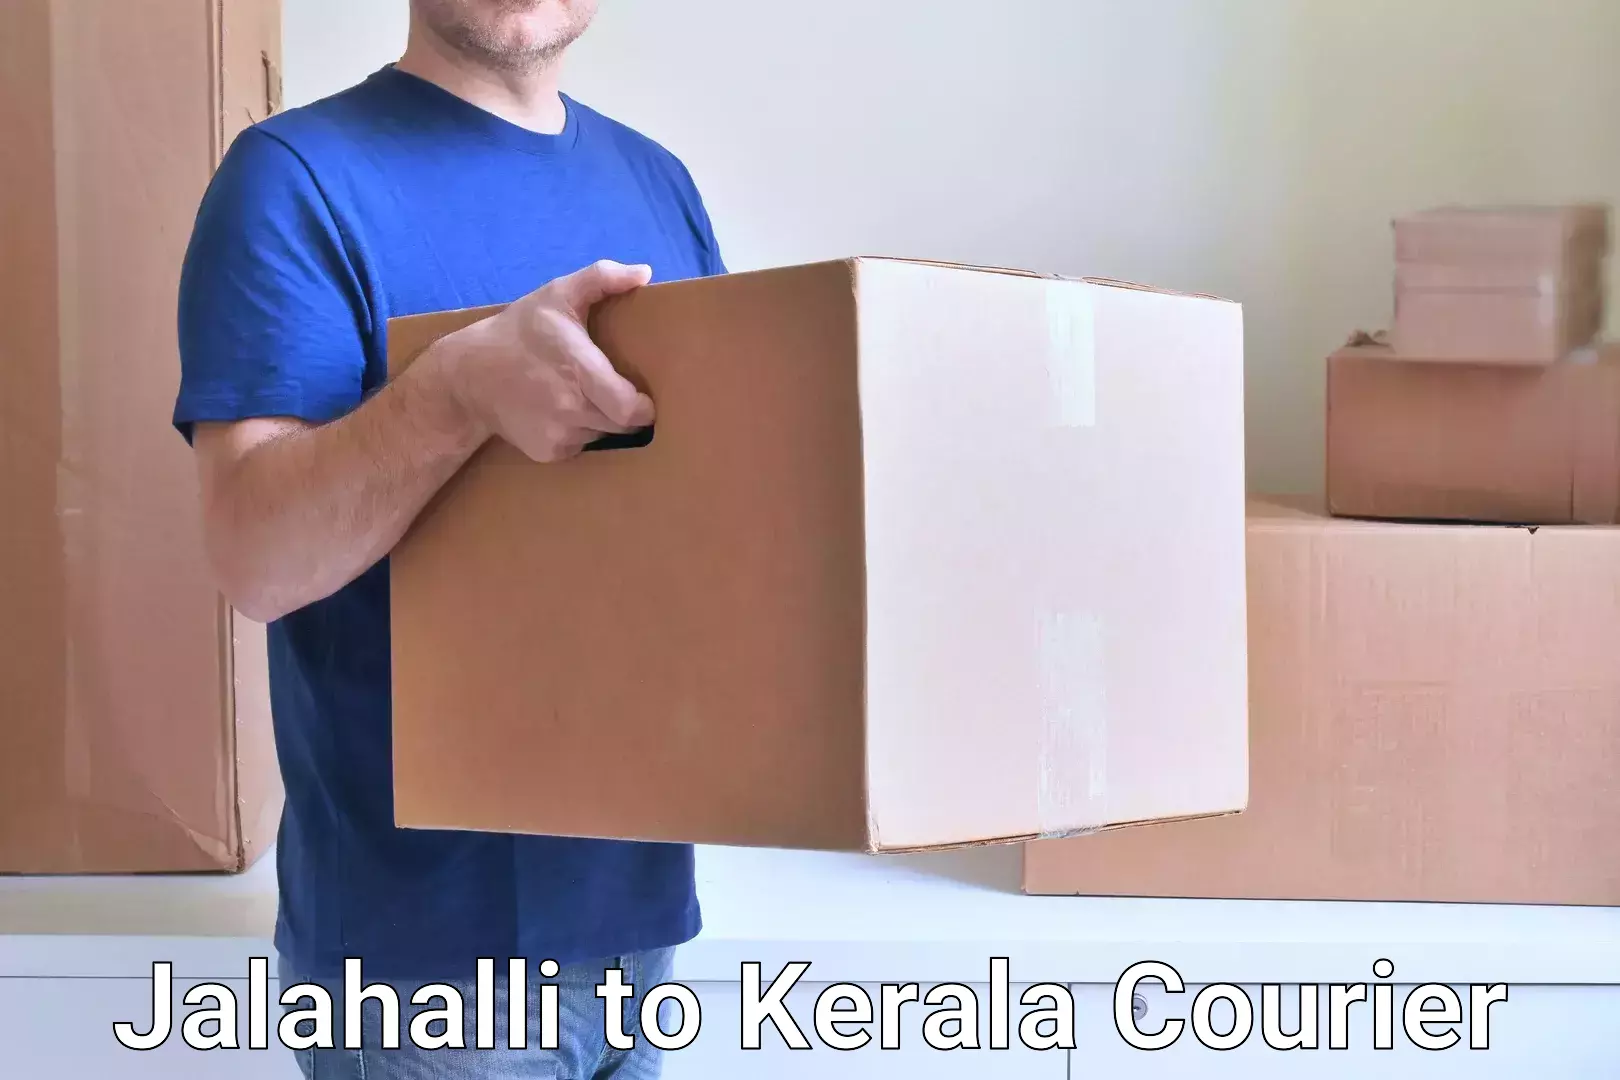 Courier service comparison Jalahalli to Cochin Port Kochi